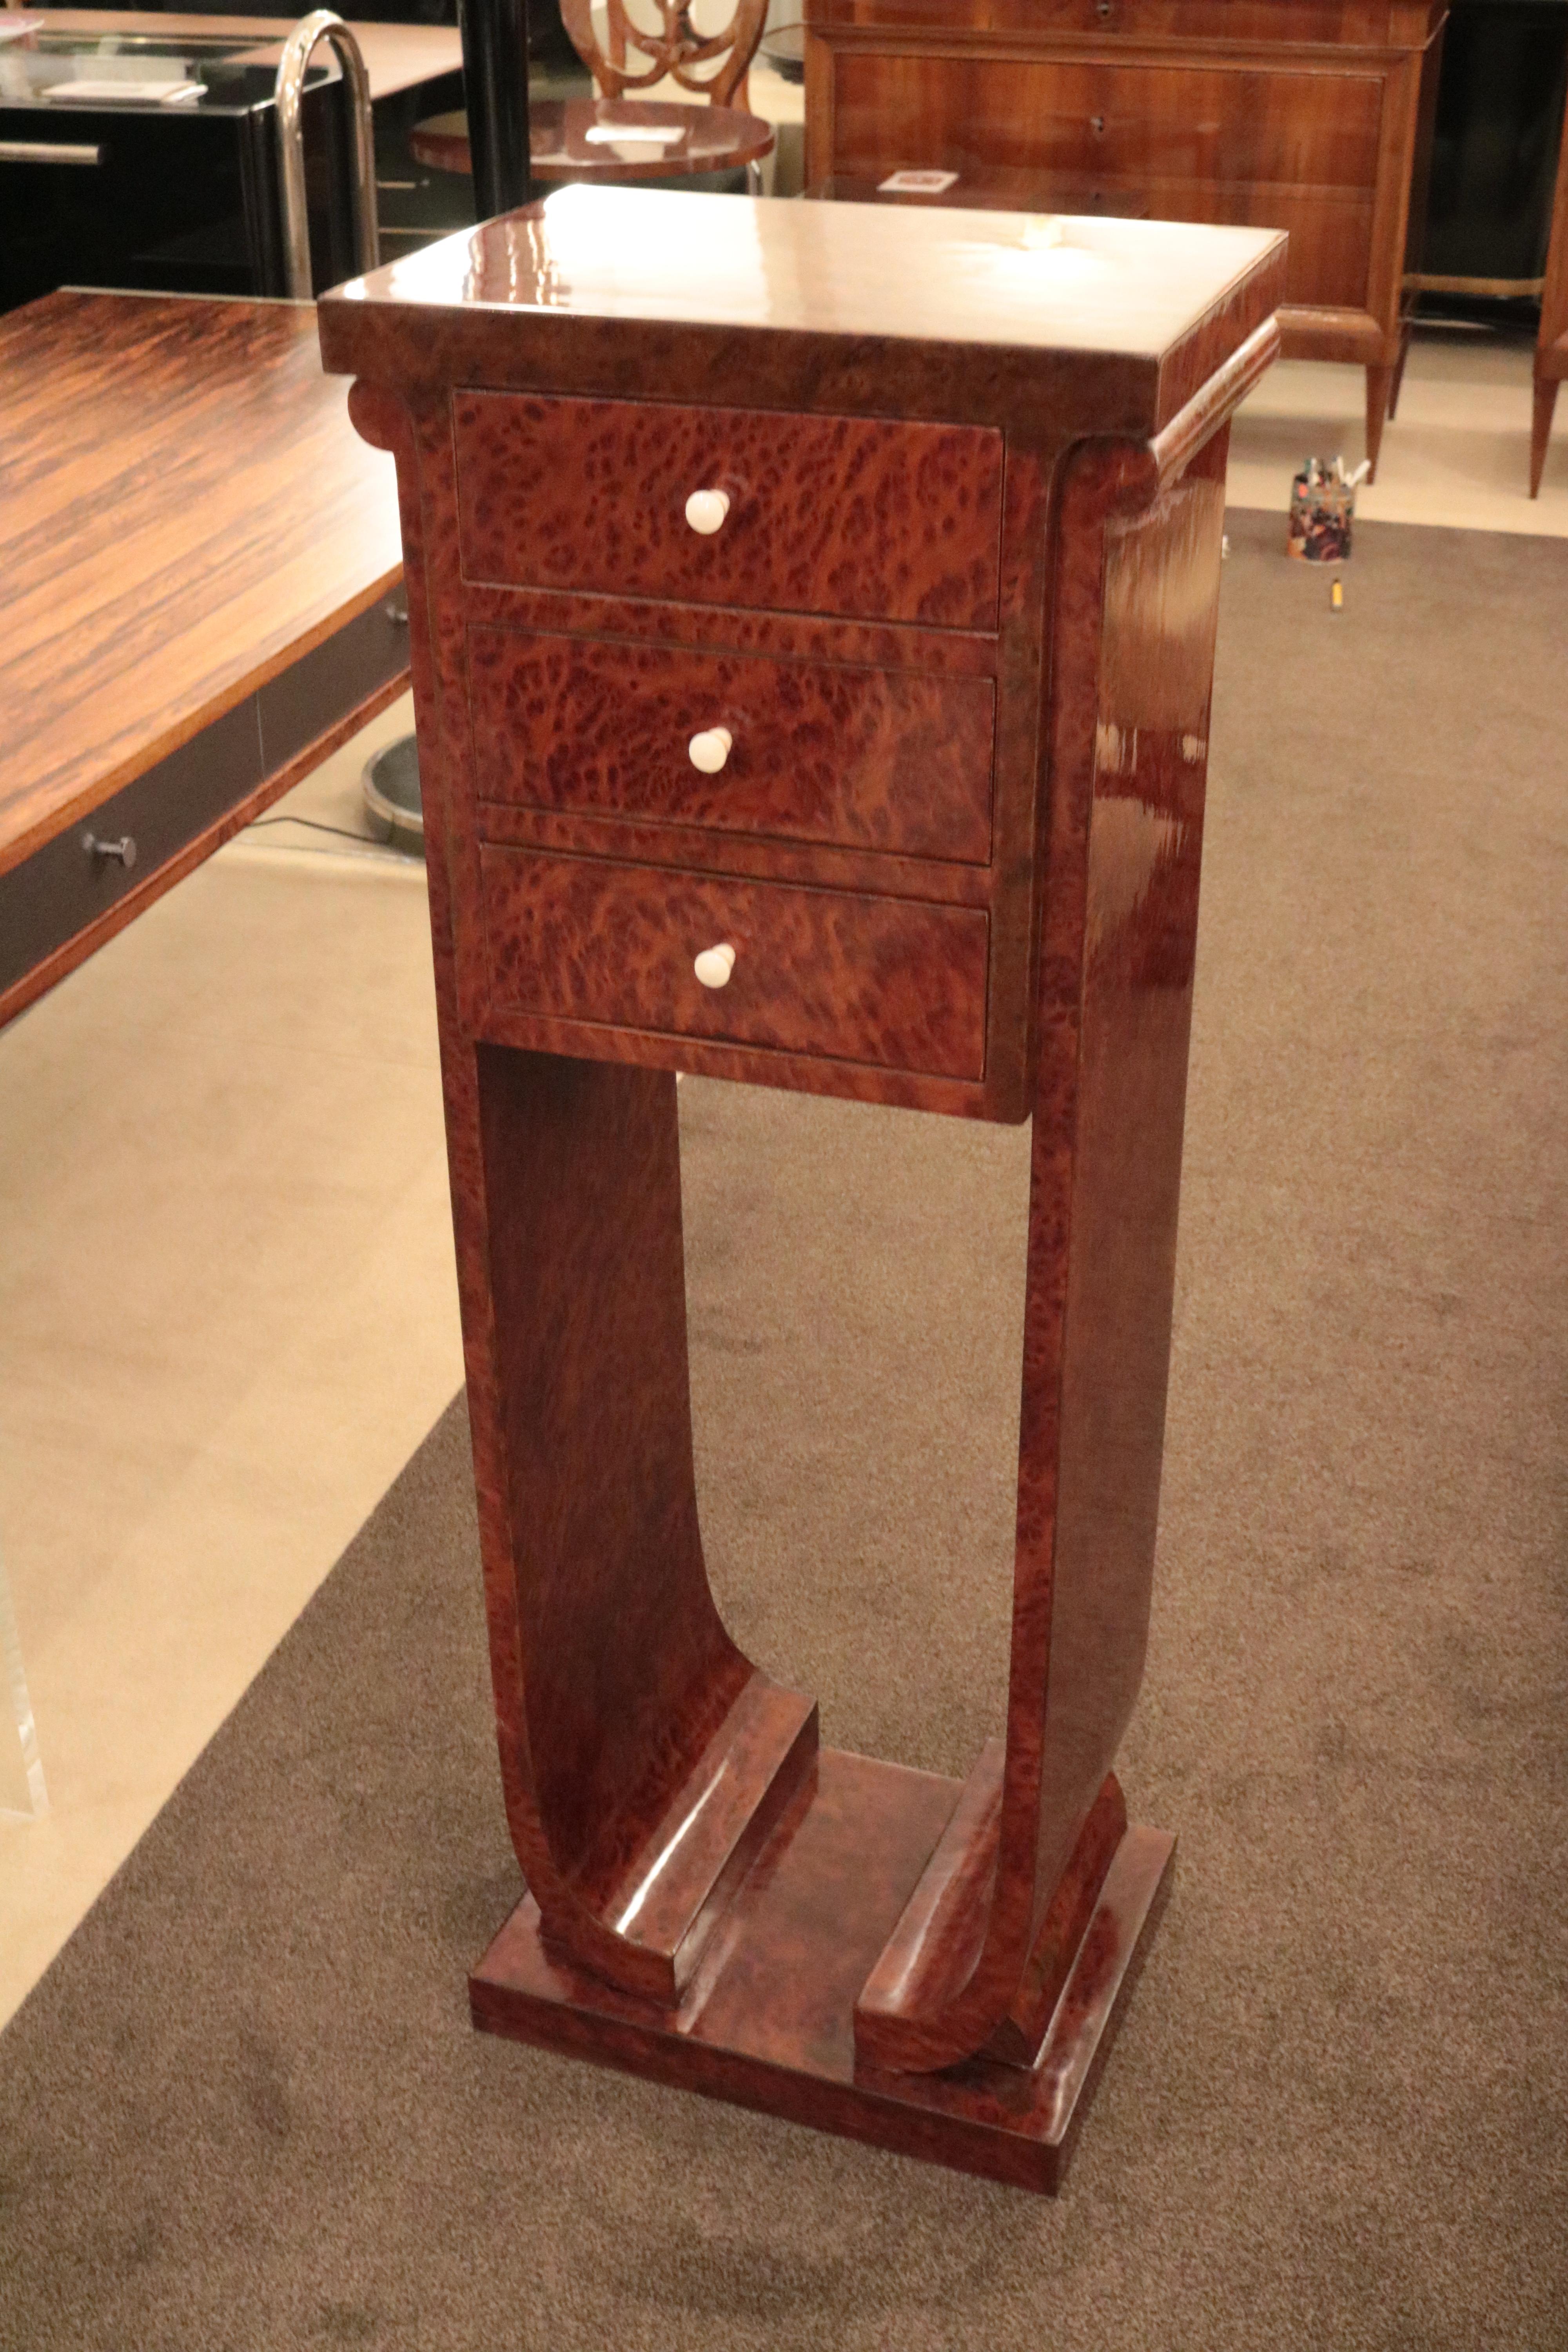 A Jules leleu designed Art Deco pedestal.
Amboyna with U shaped supports,
three small drawers.
 